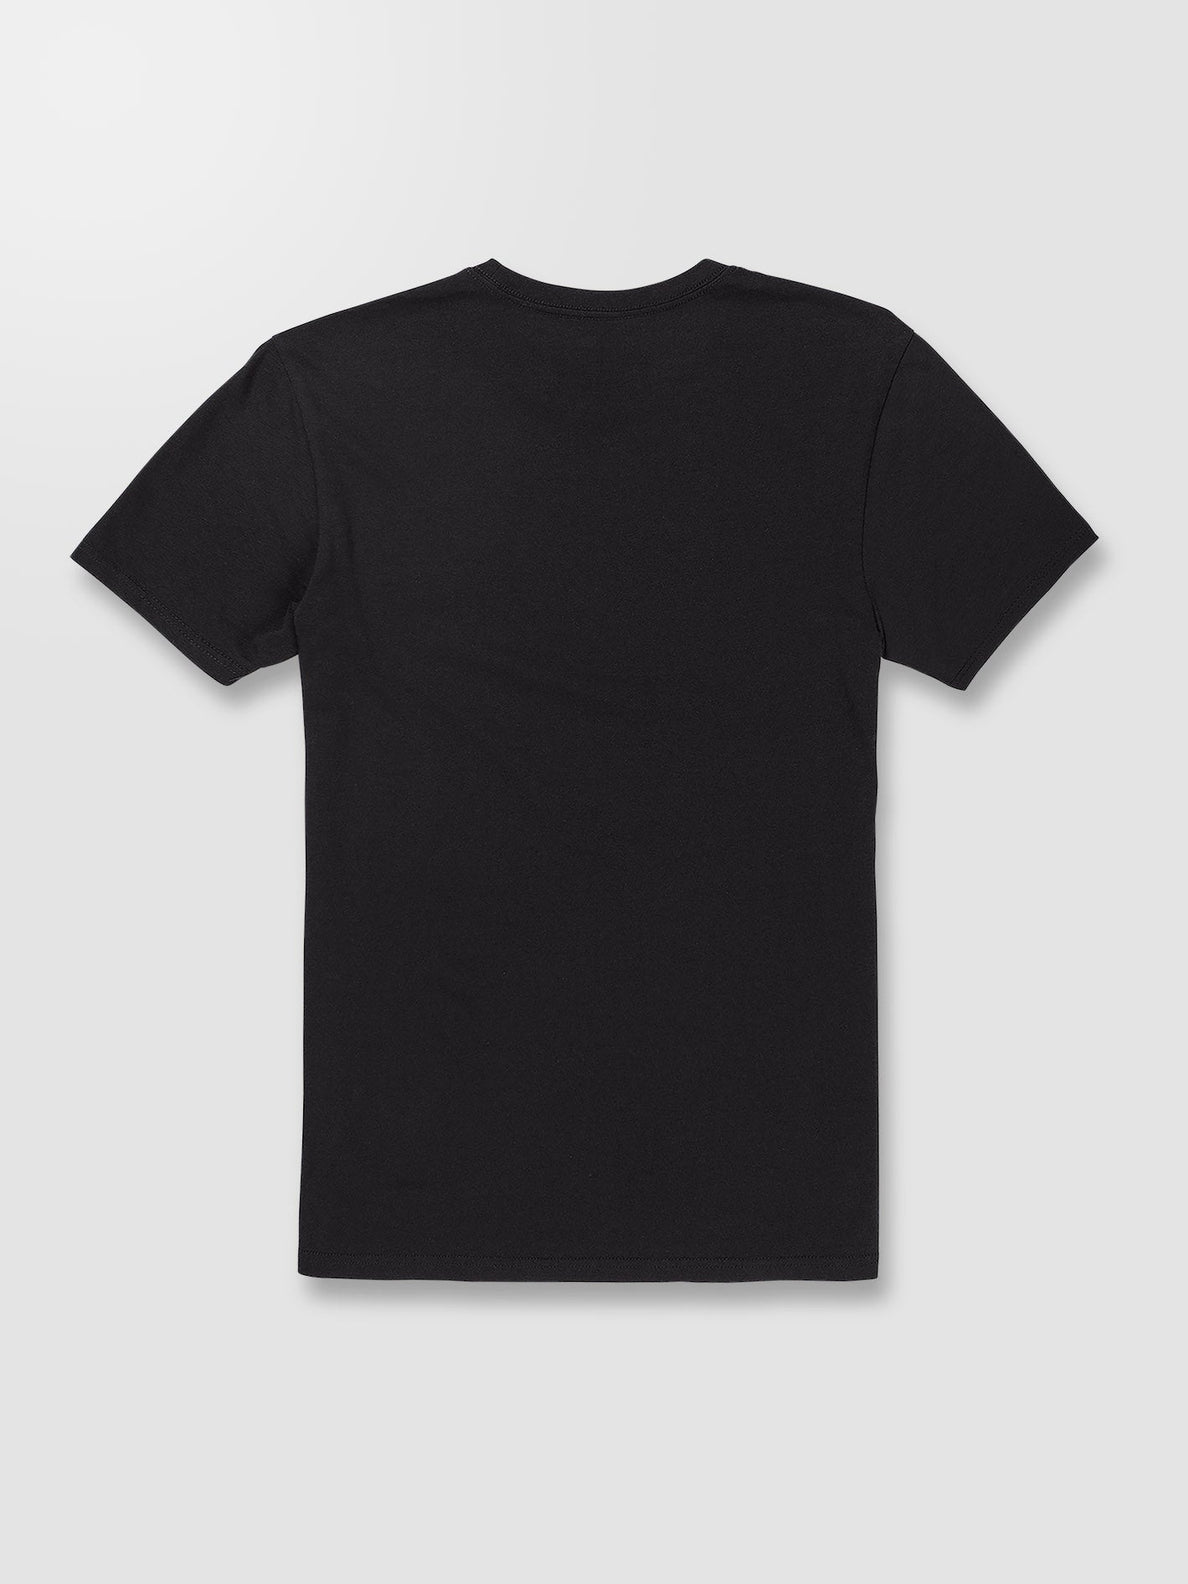 Iconic Stone T-shirt - BLACK COMBO (A5032208_BLC) [11]